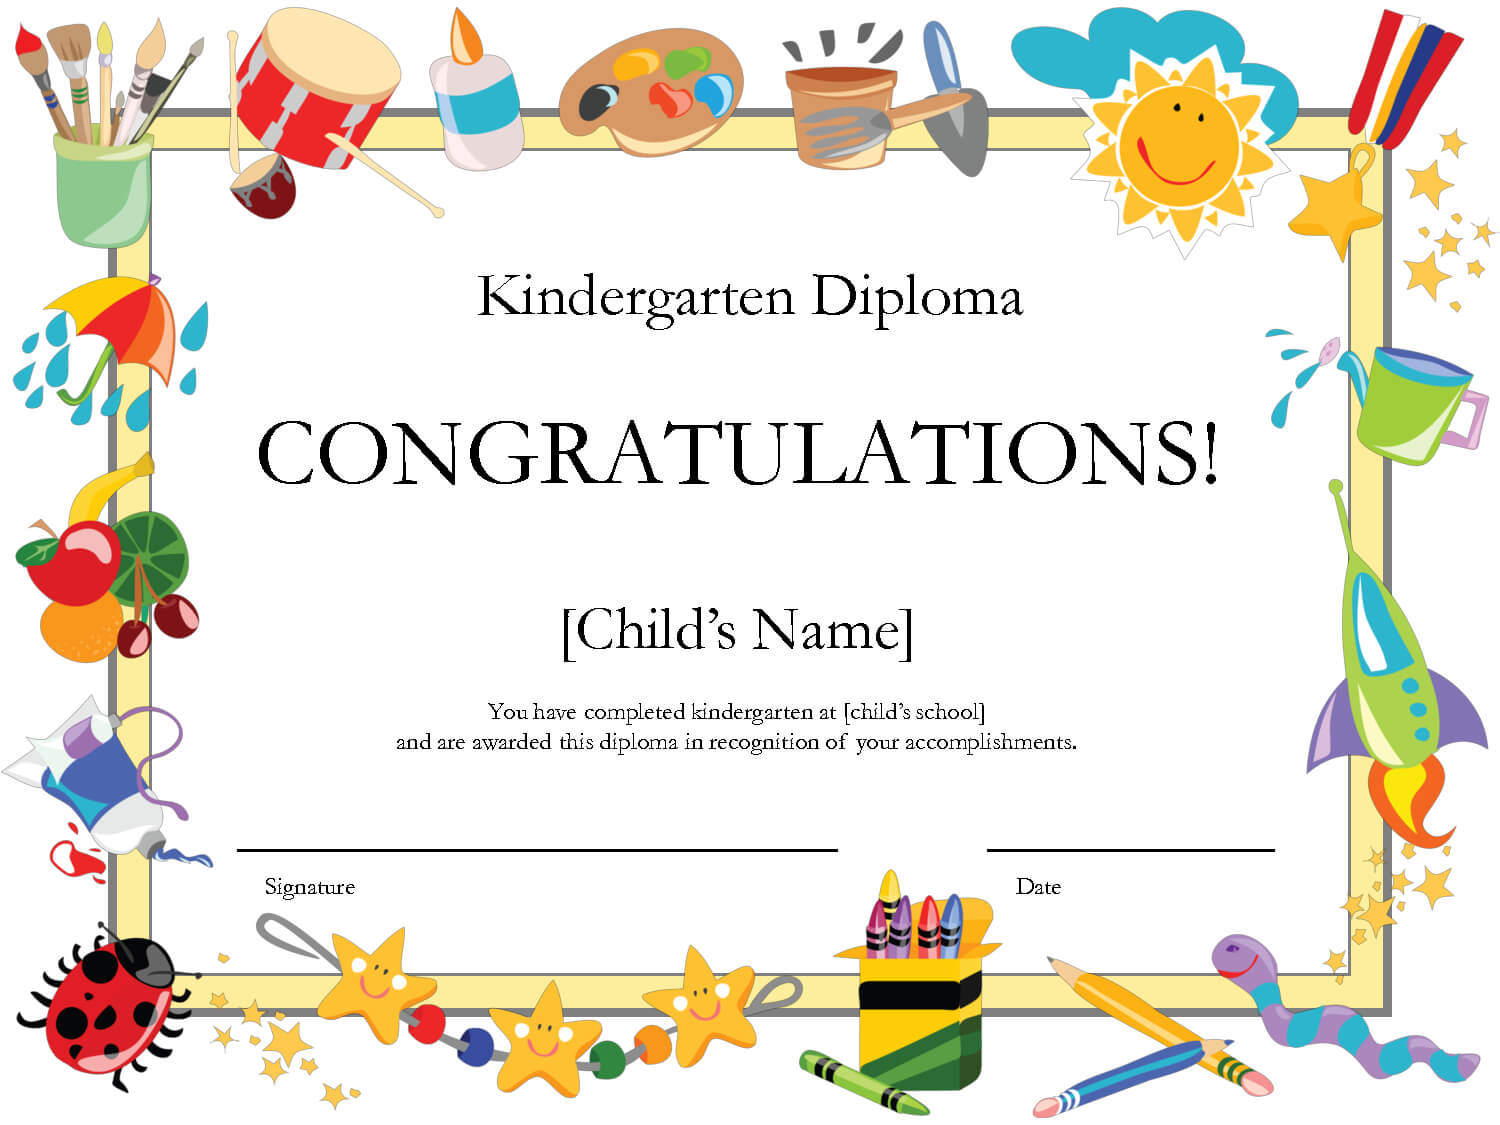 Free Printable Kindergarten Diplomaprintshowergames For Free School Certificate Templates